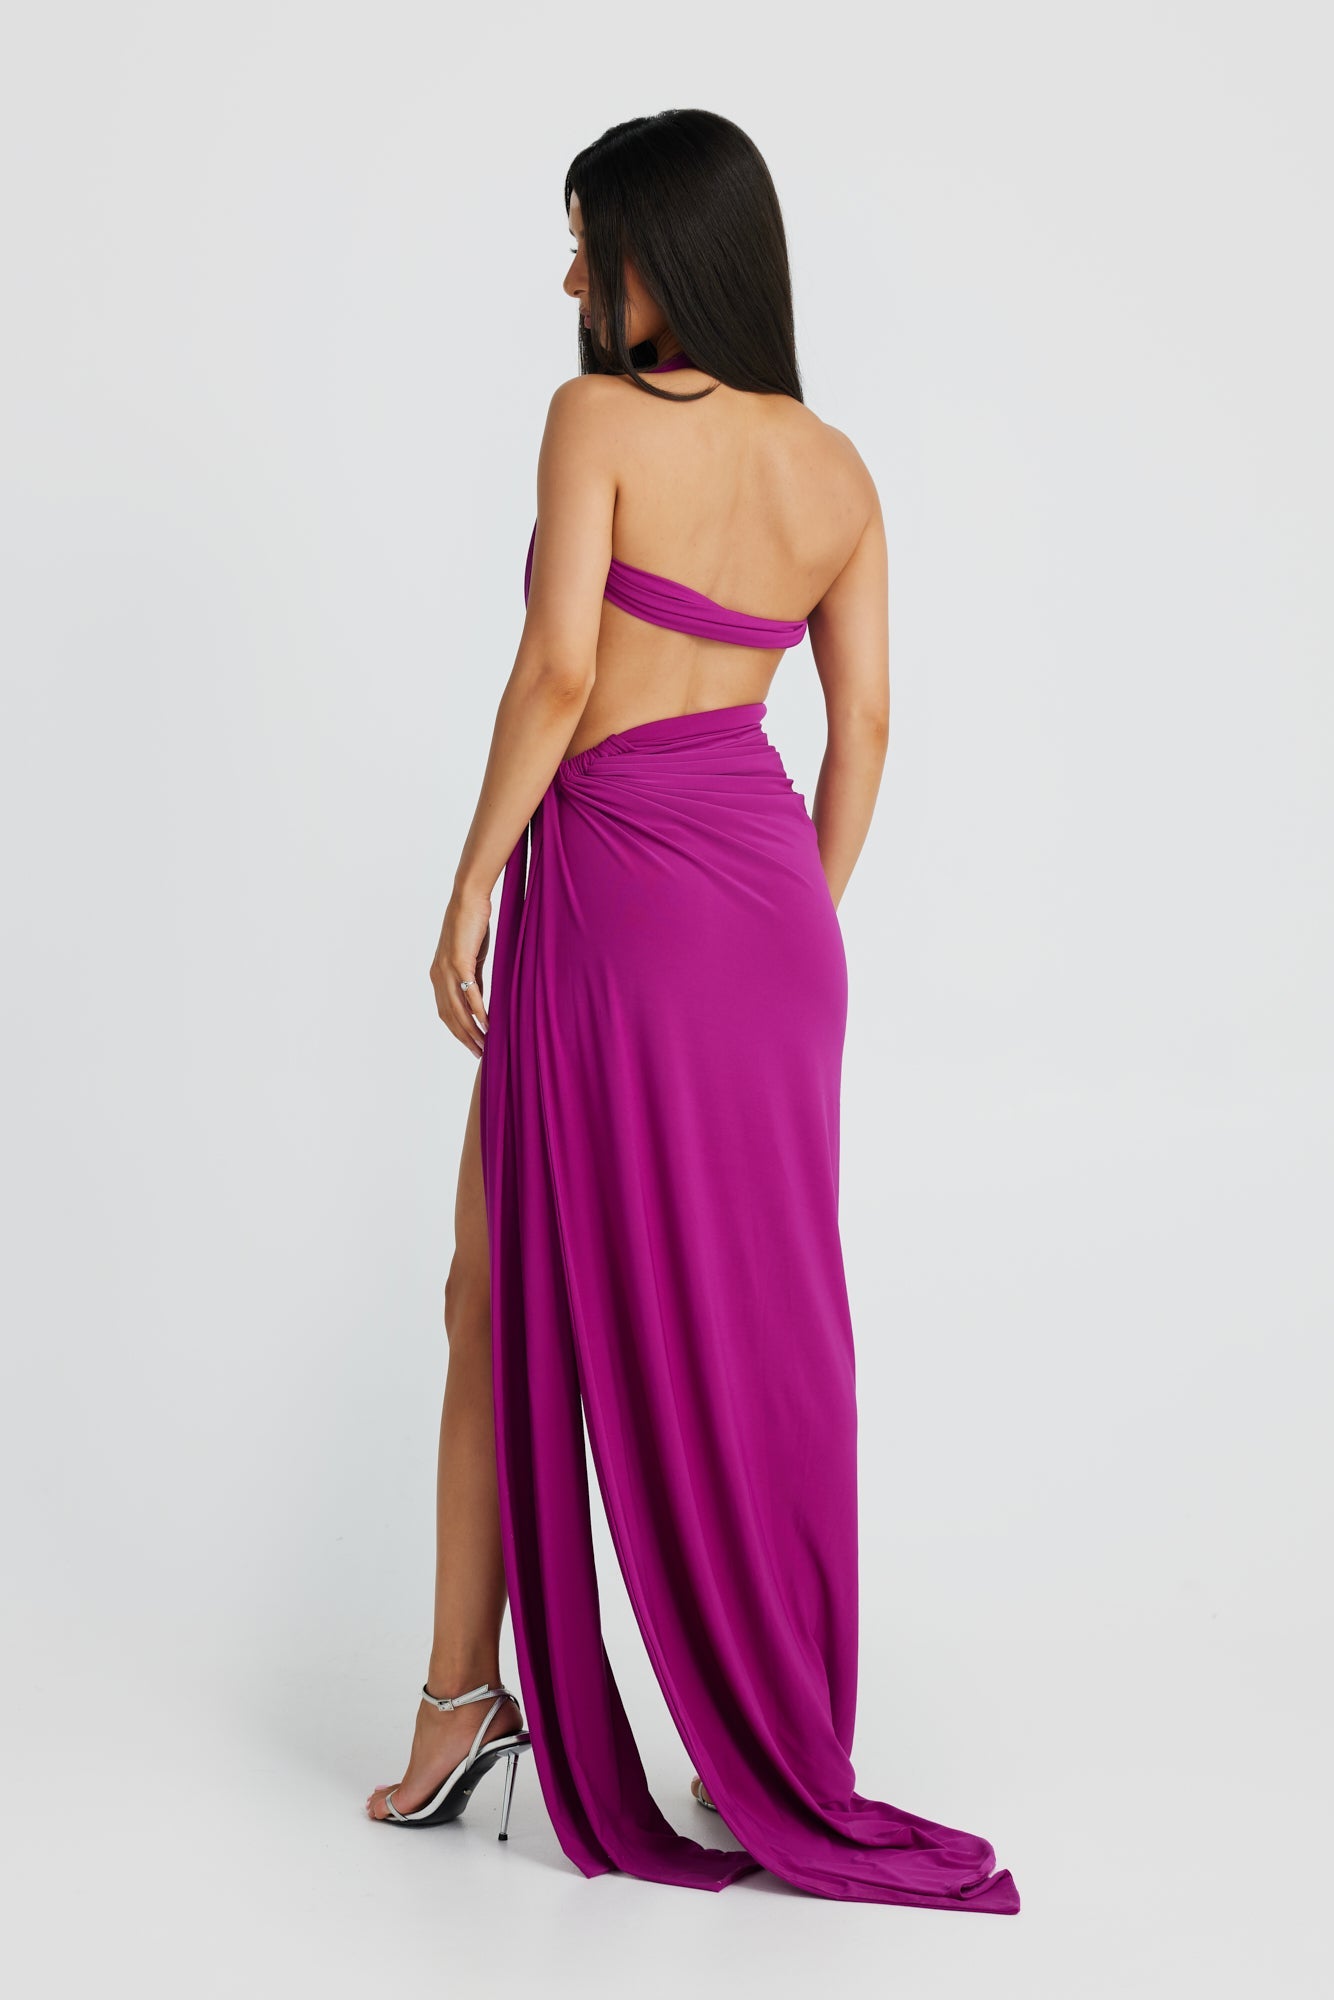 MÉLANI The Label KAILANI Purple Cut Out Leg Split Form Fitted Dress